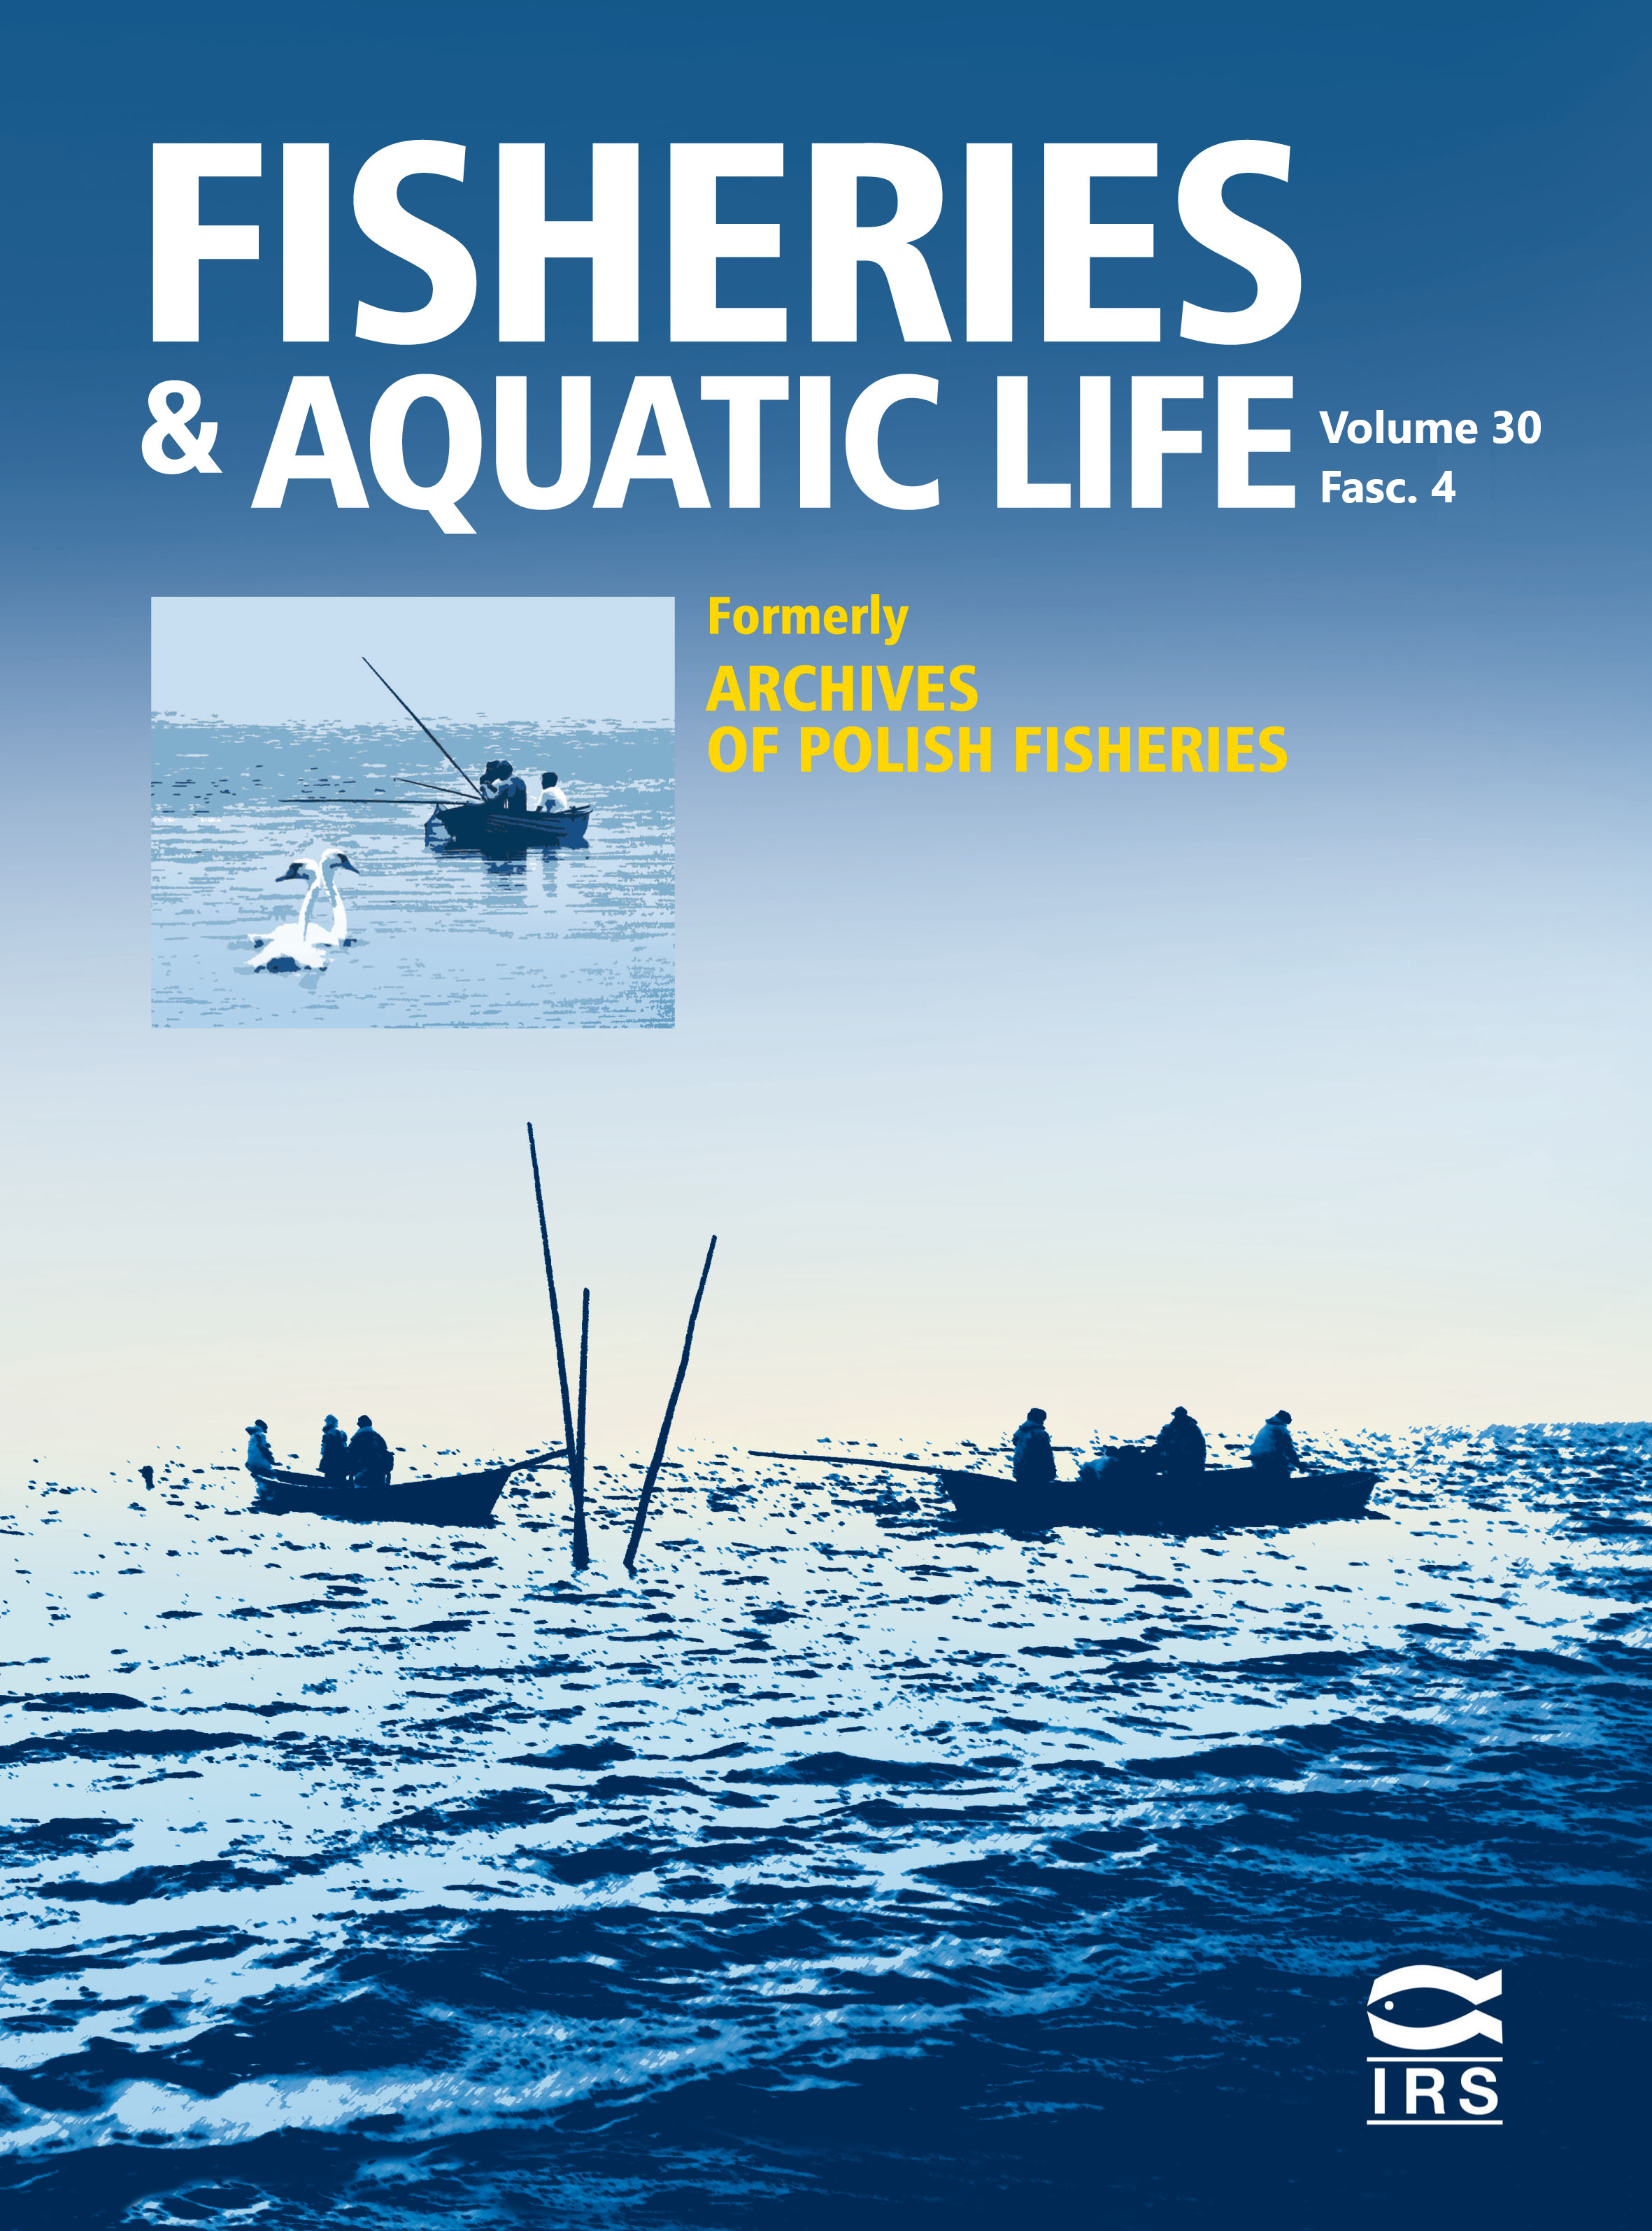 Fisheries & Acquatic Life cover, volume 30, fasc. 4